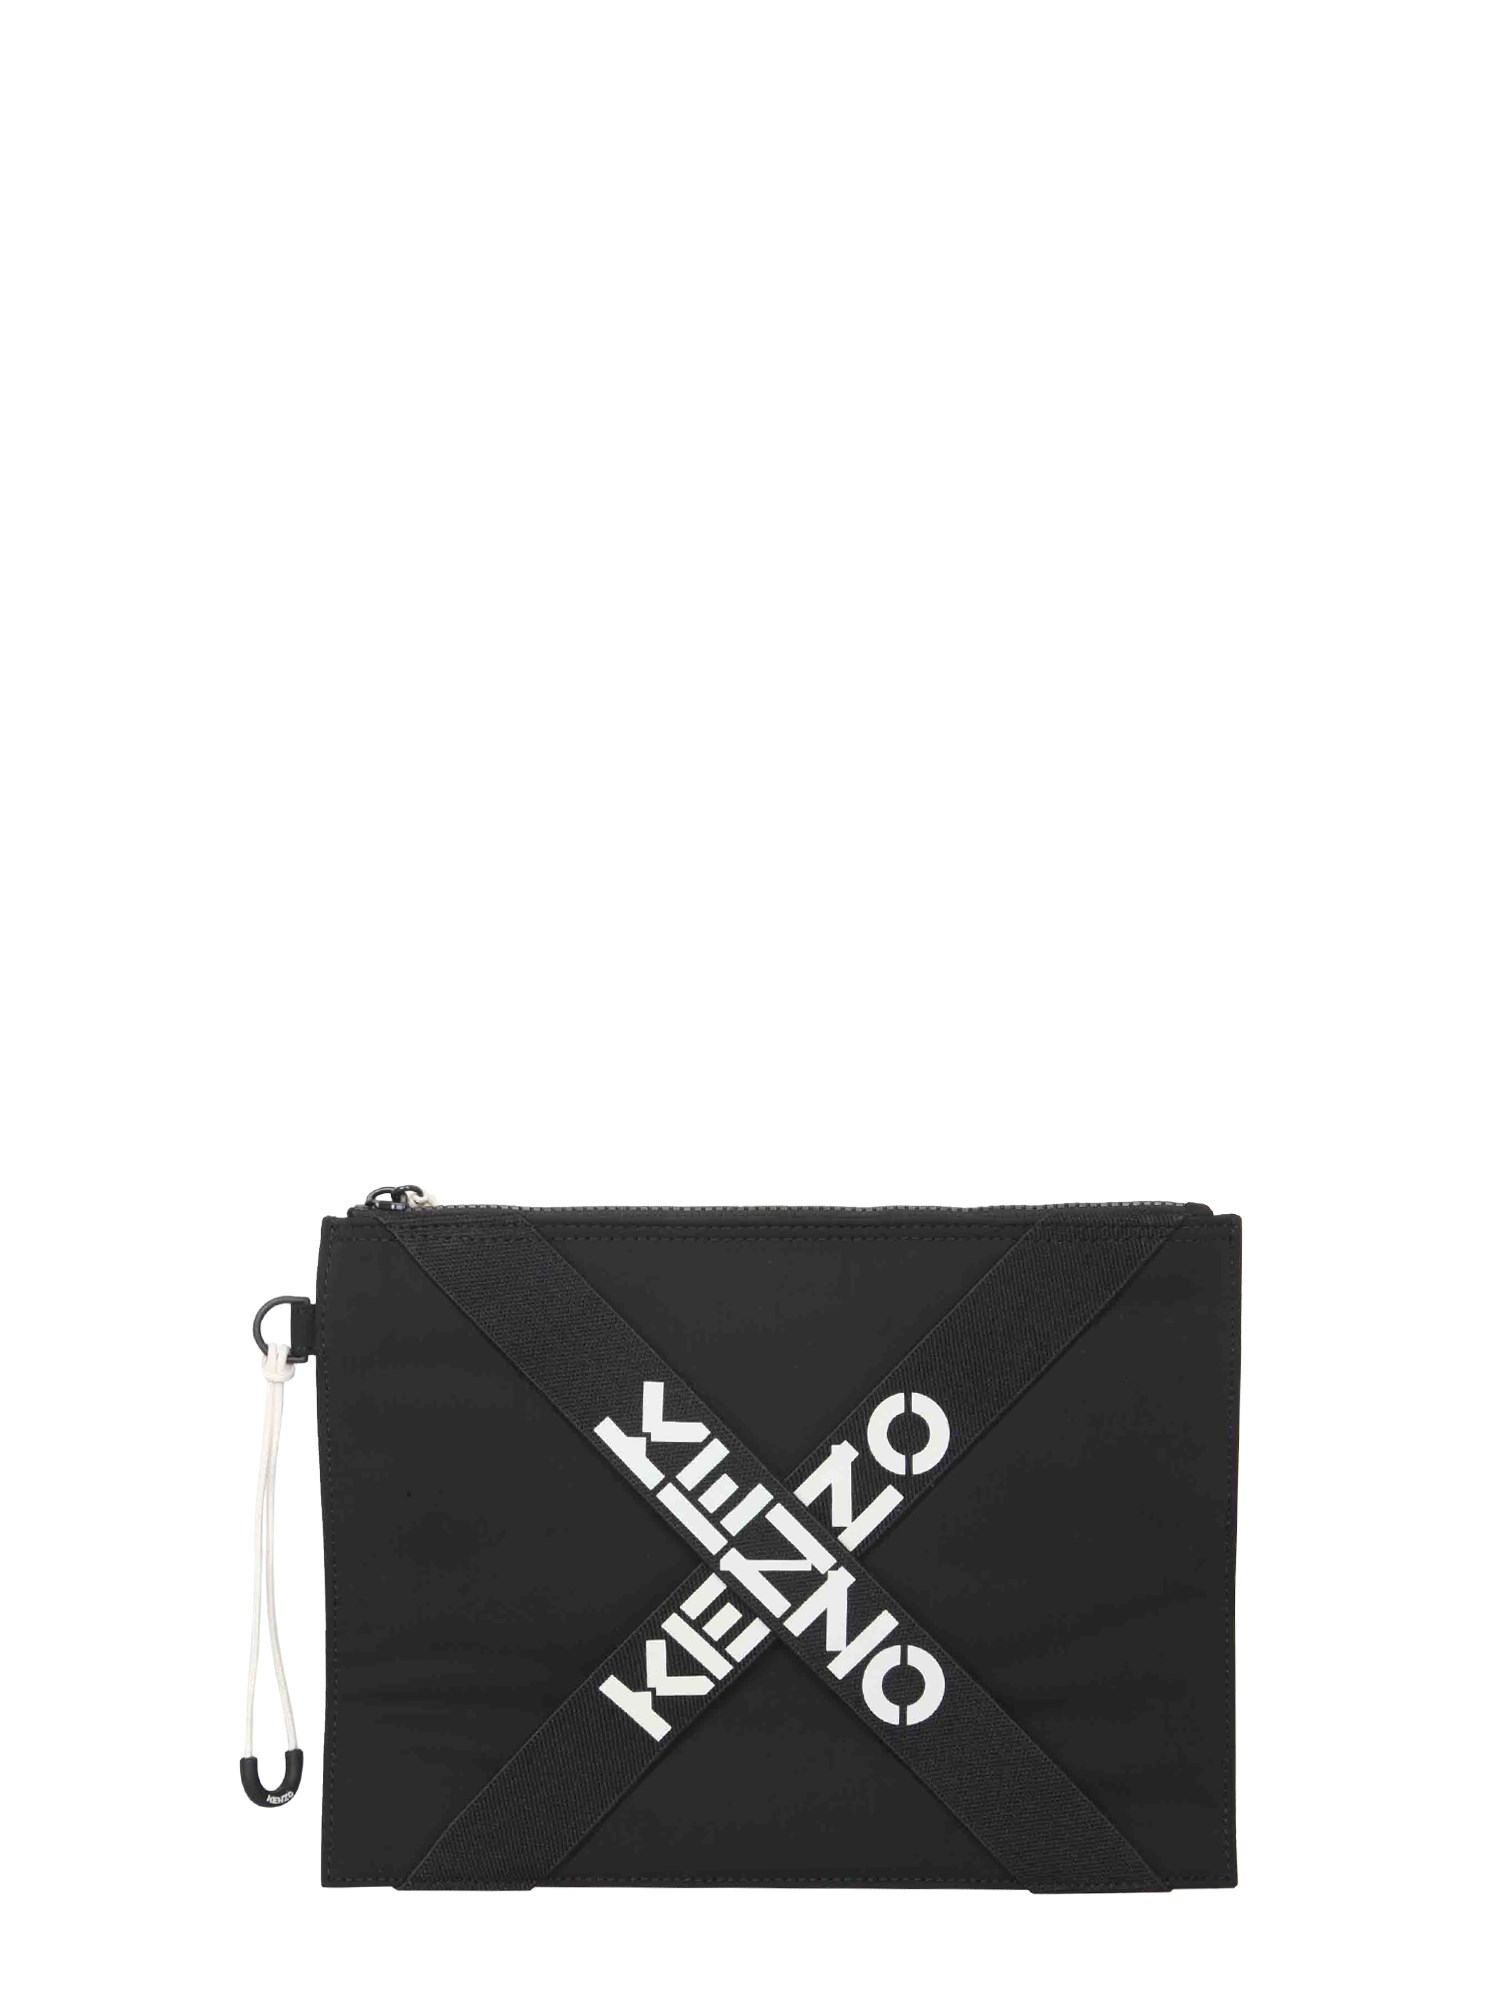 kenzo pouch with logo